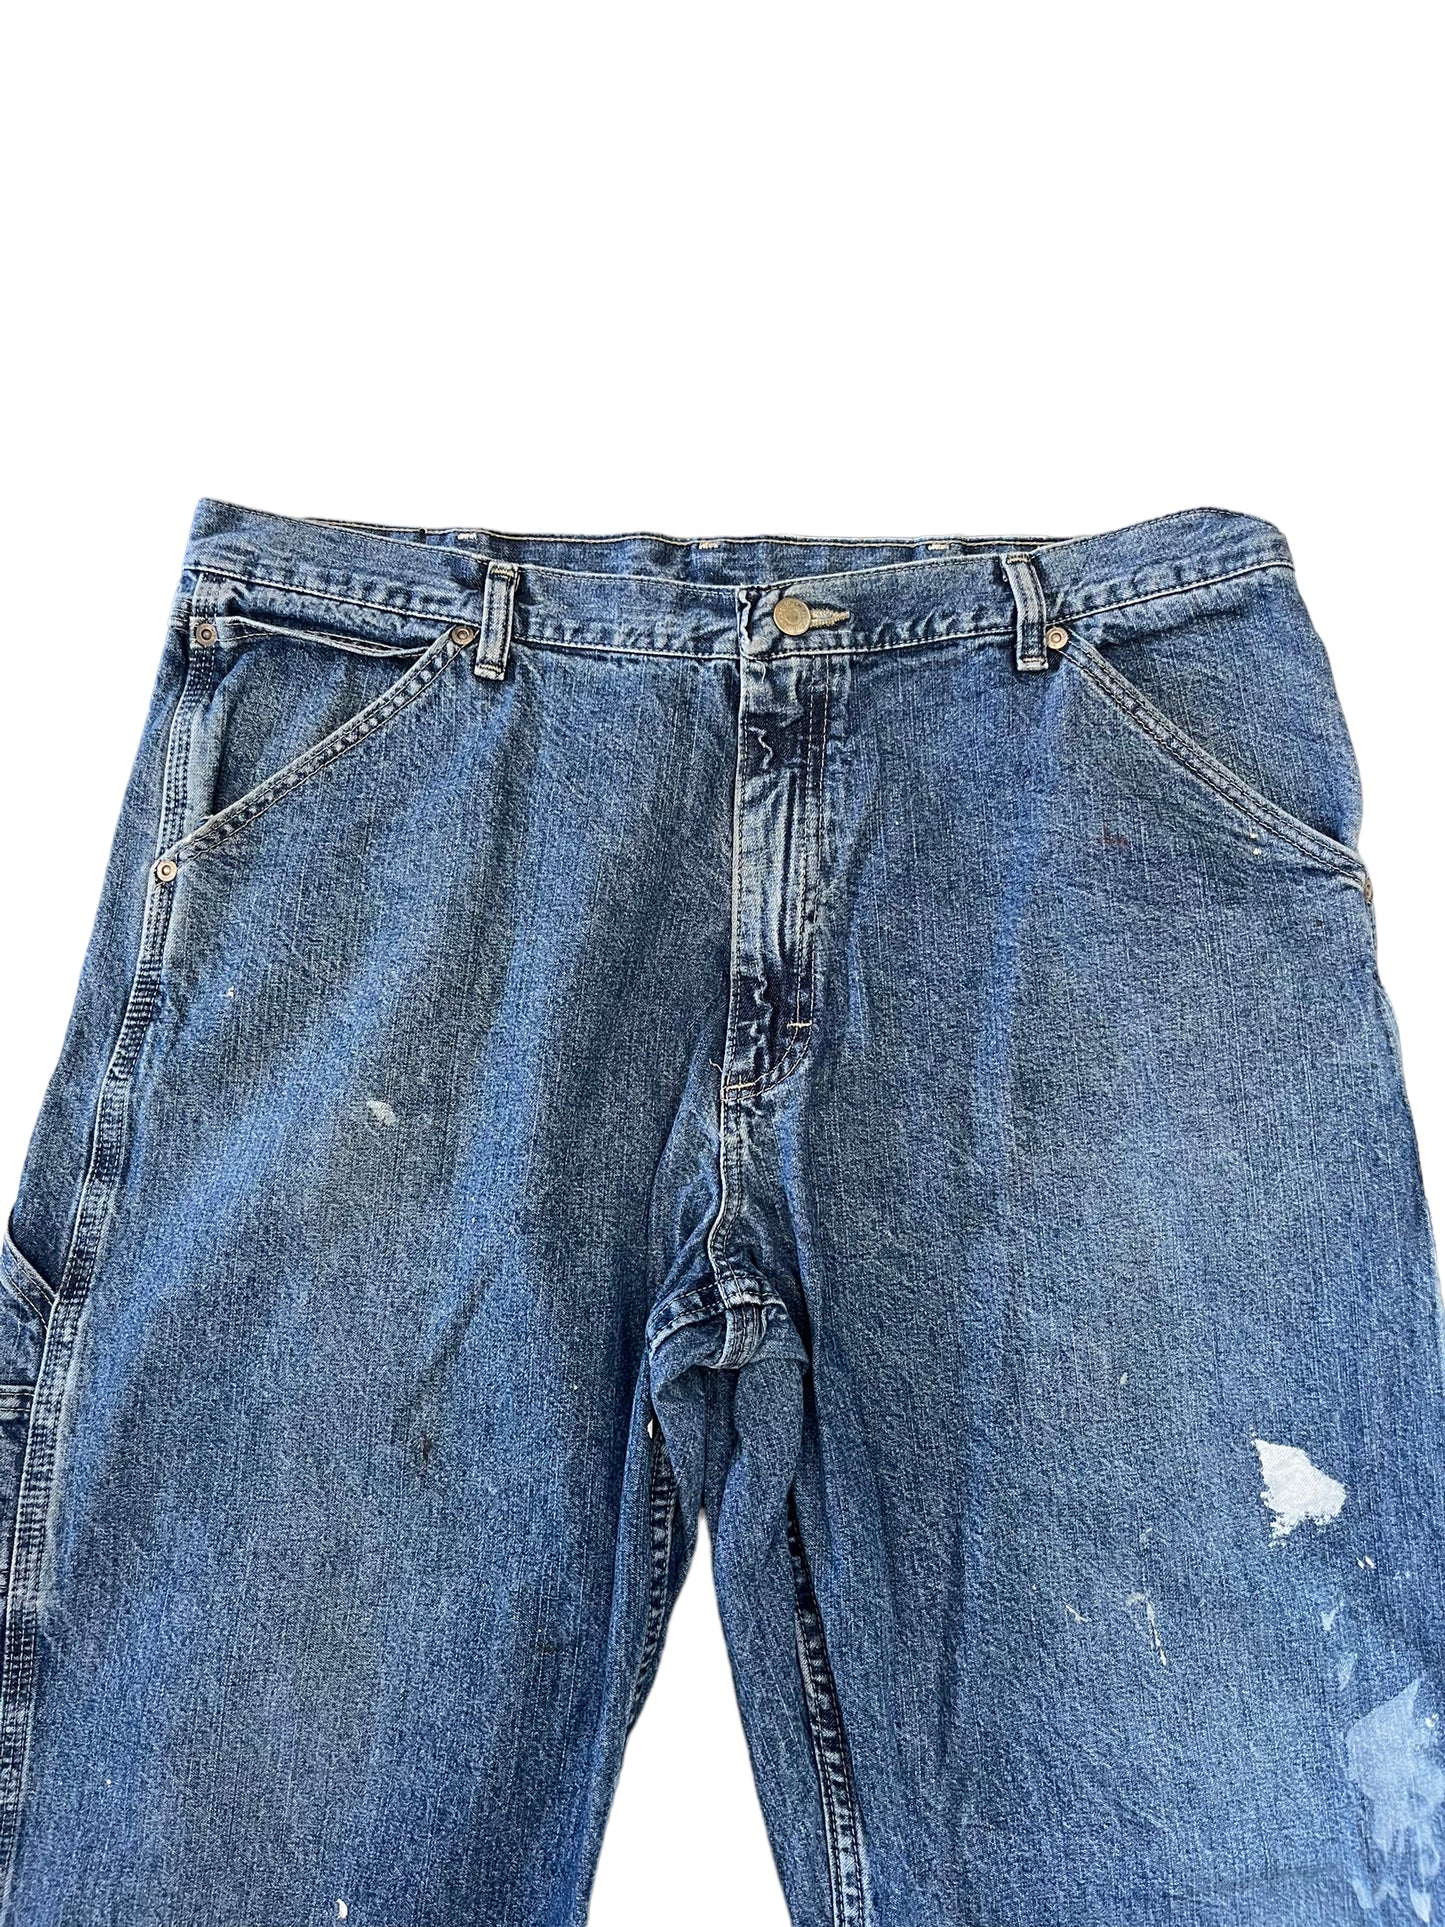 (36W x 30L) Vintage Wrangler Utility Jeans